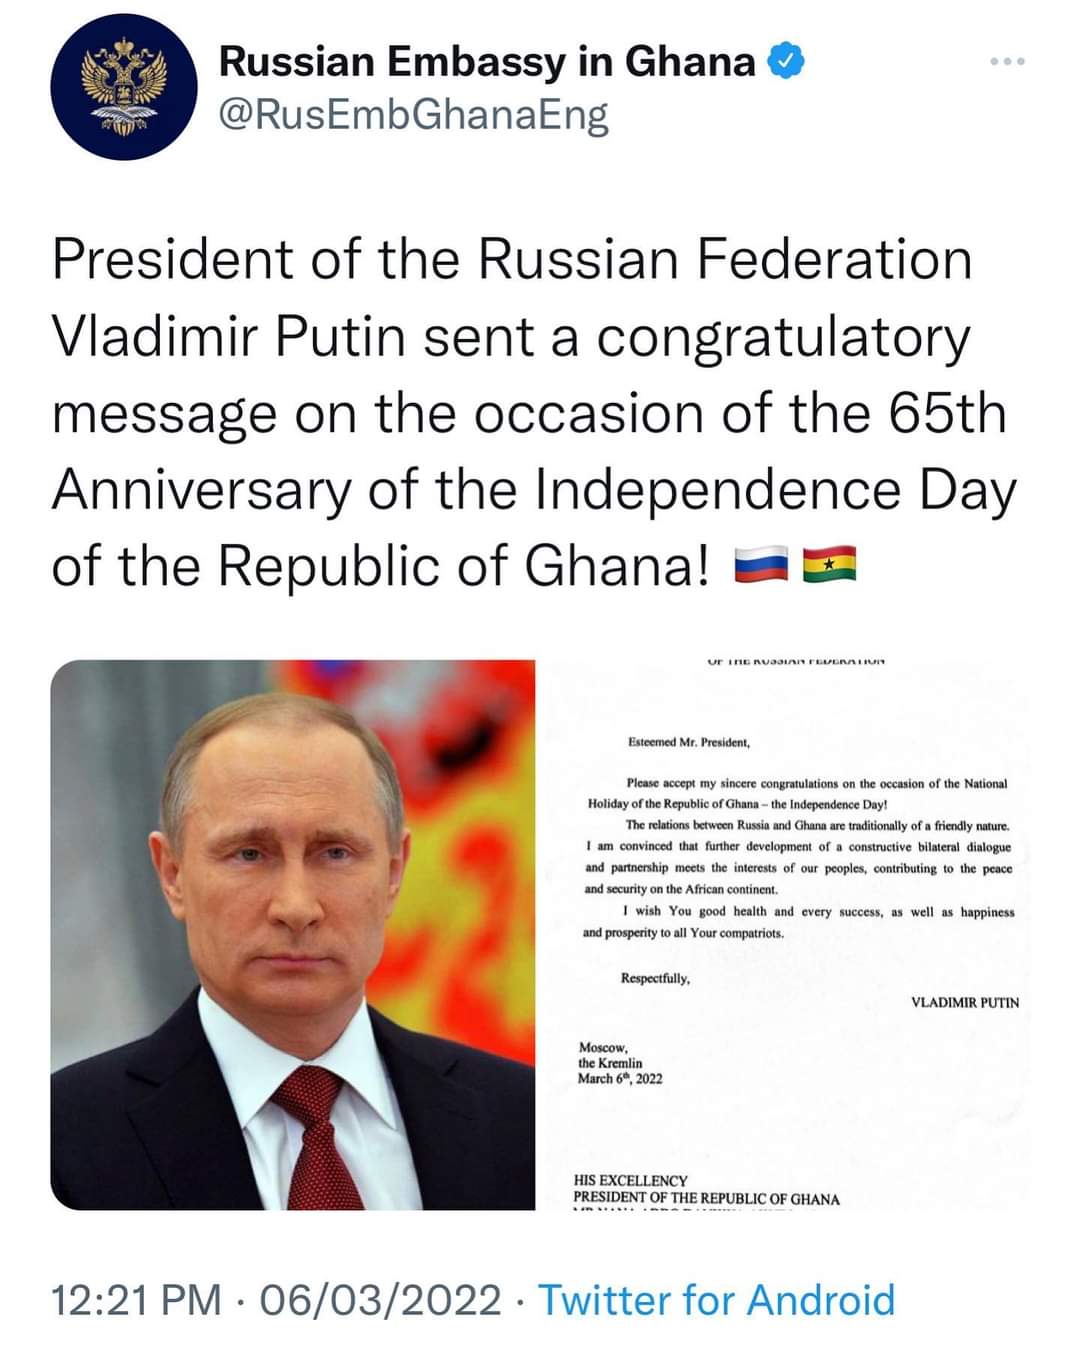 Putin congratulates Ghana on 65th Independence Day anniversary